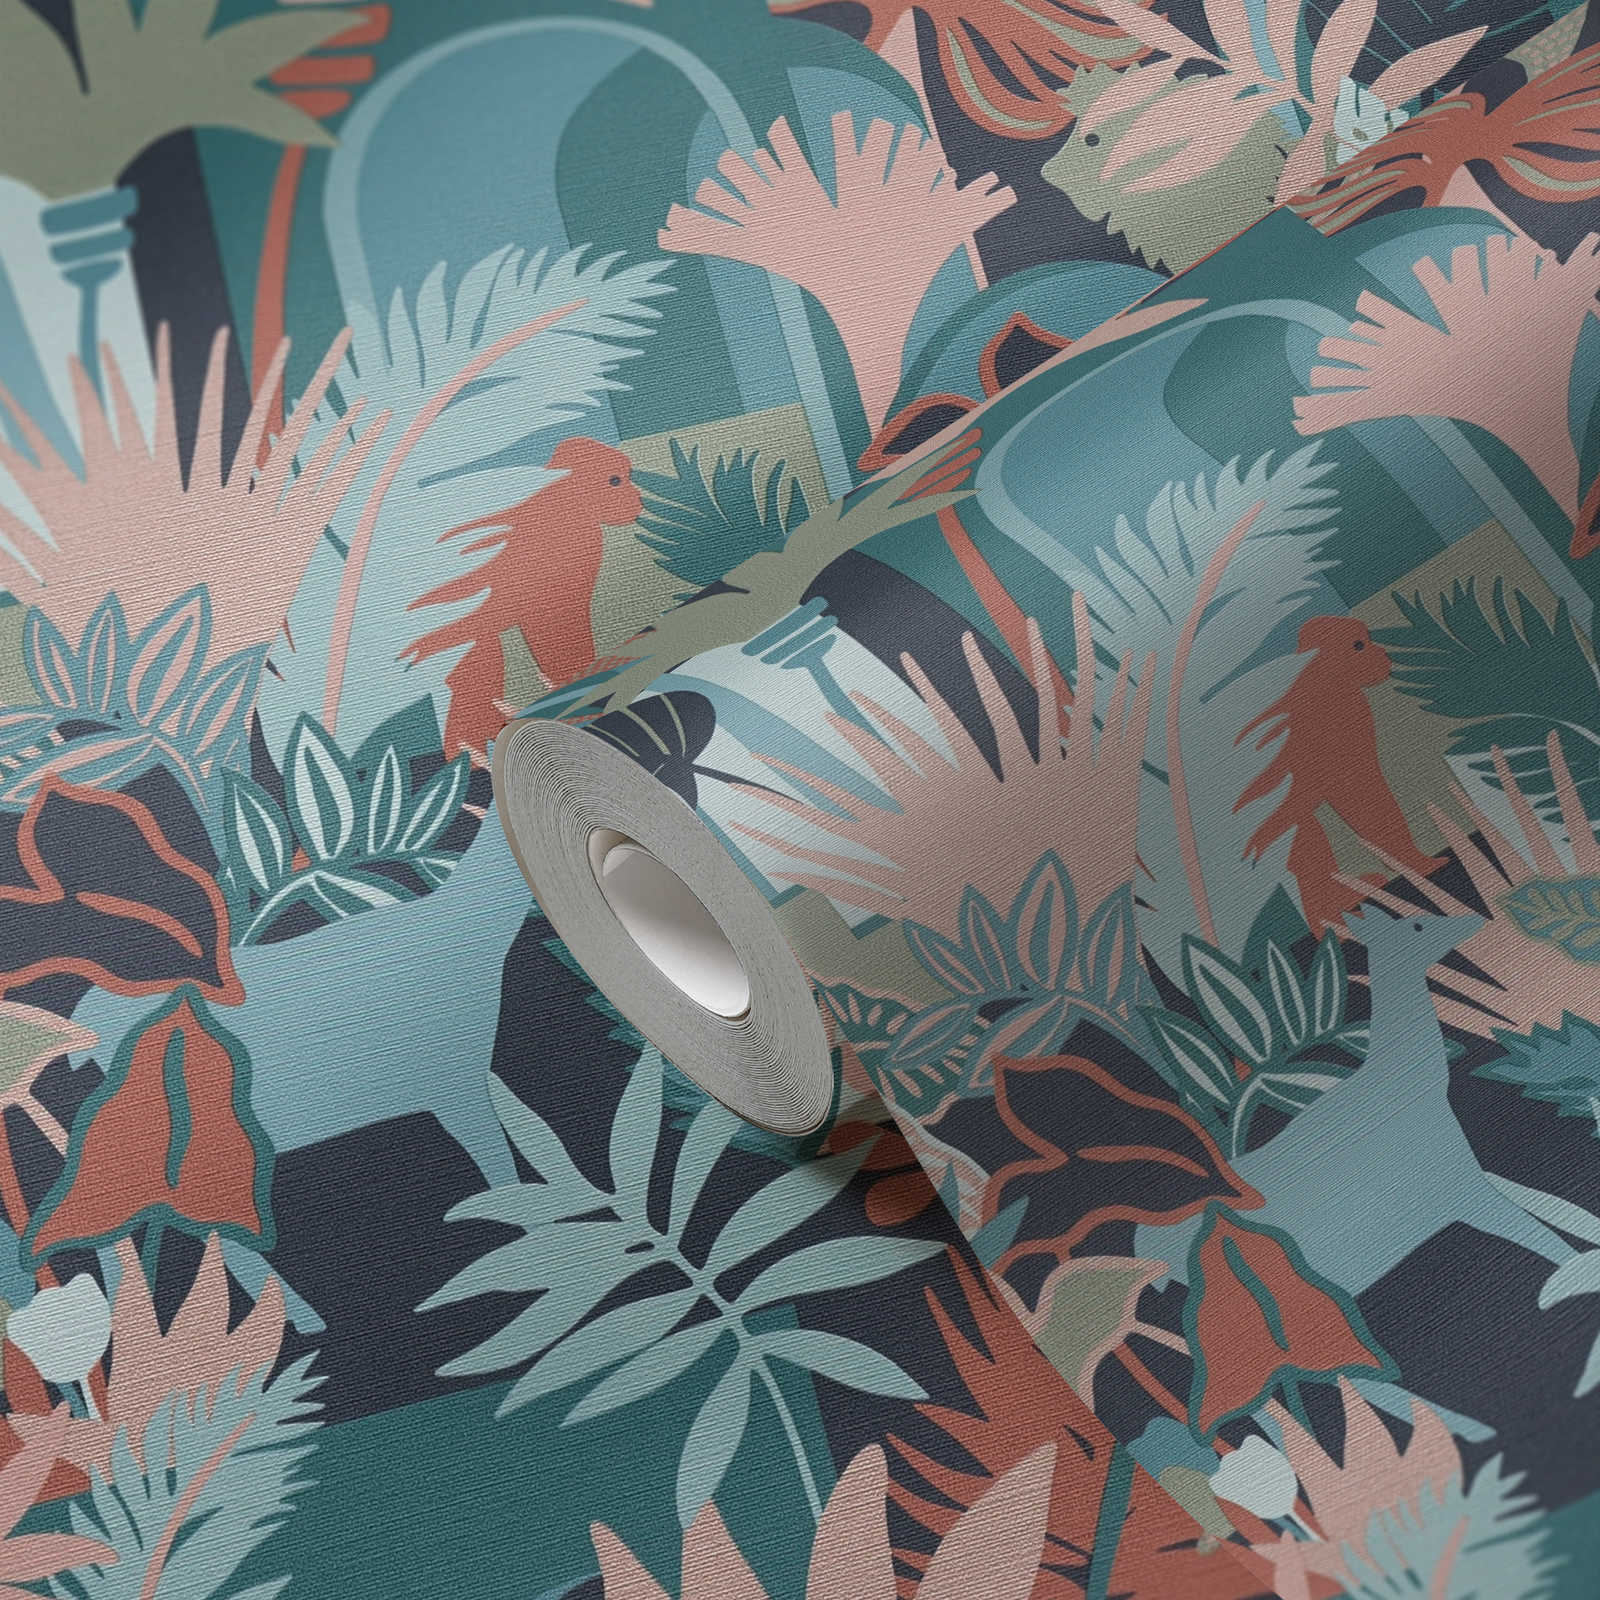             Non-woven wallpaper in jungle look with animals - multicoloured, green, blue
        